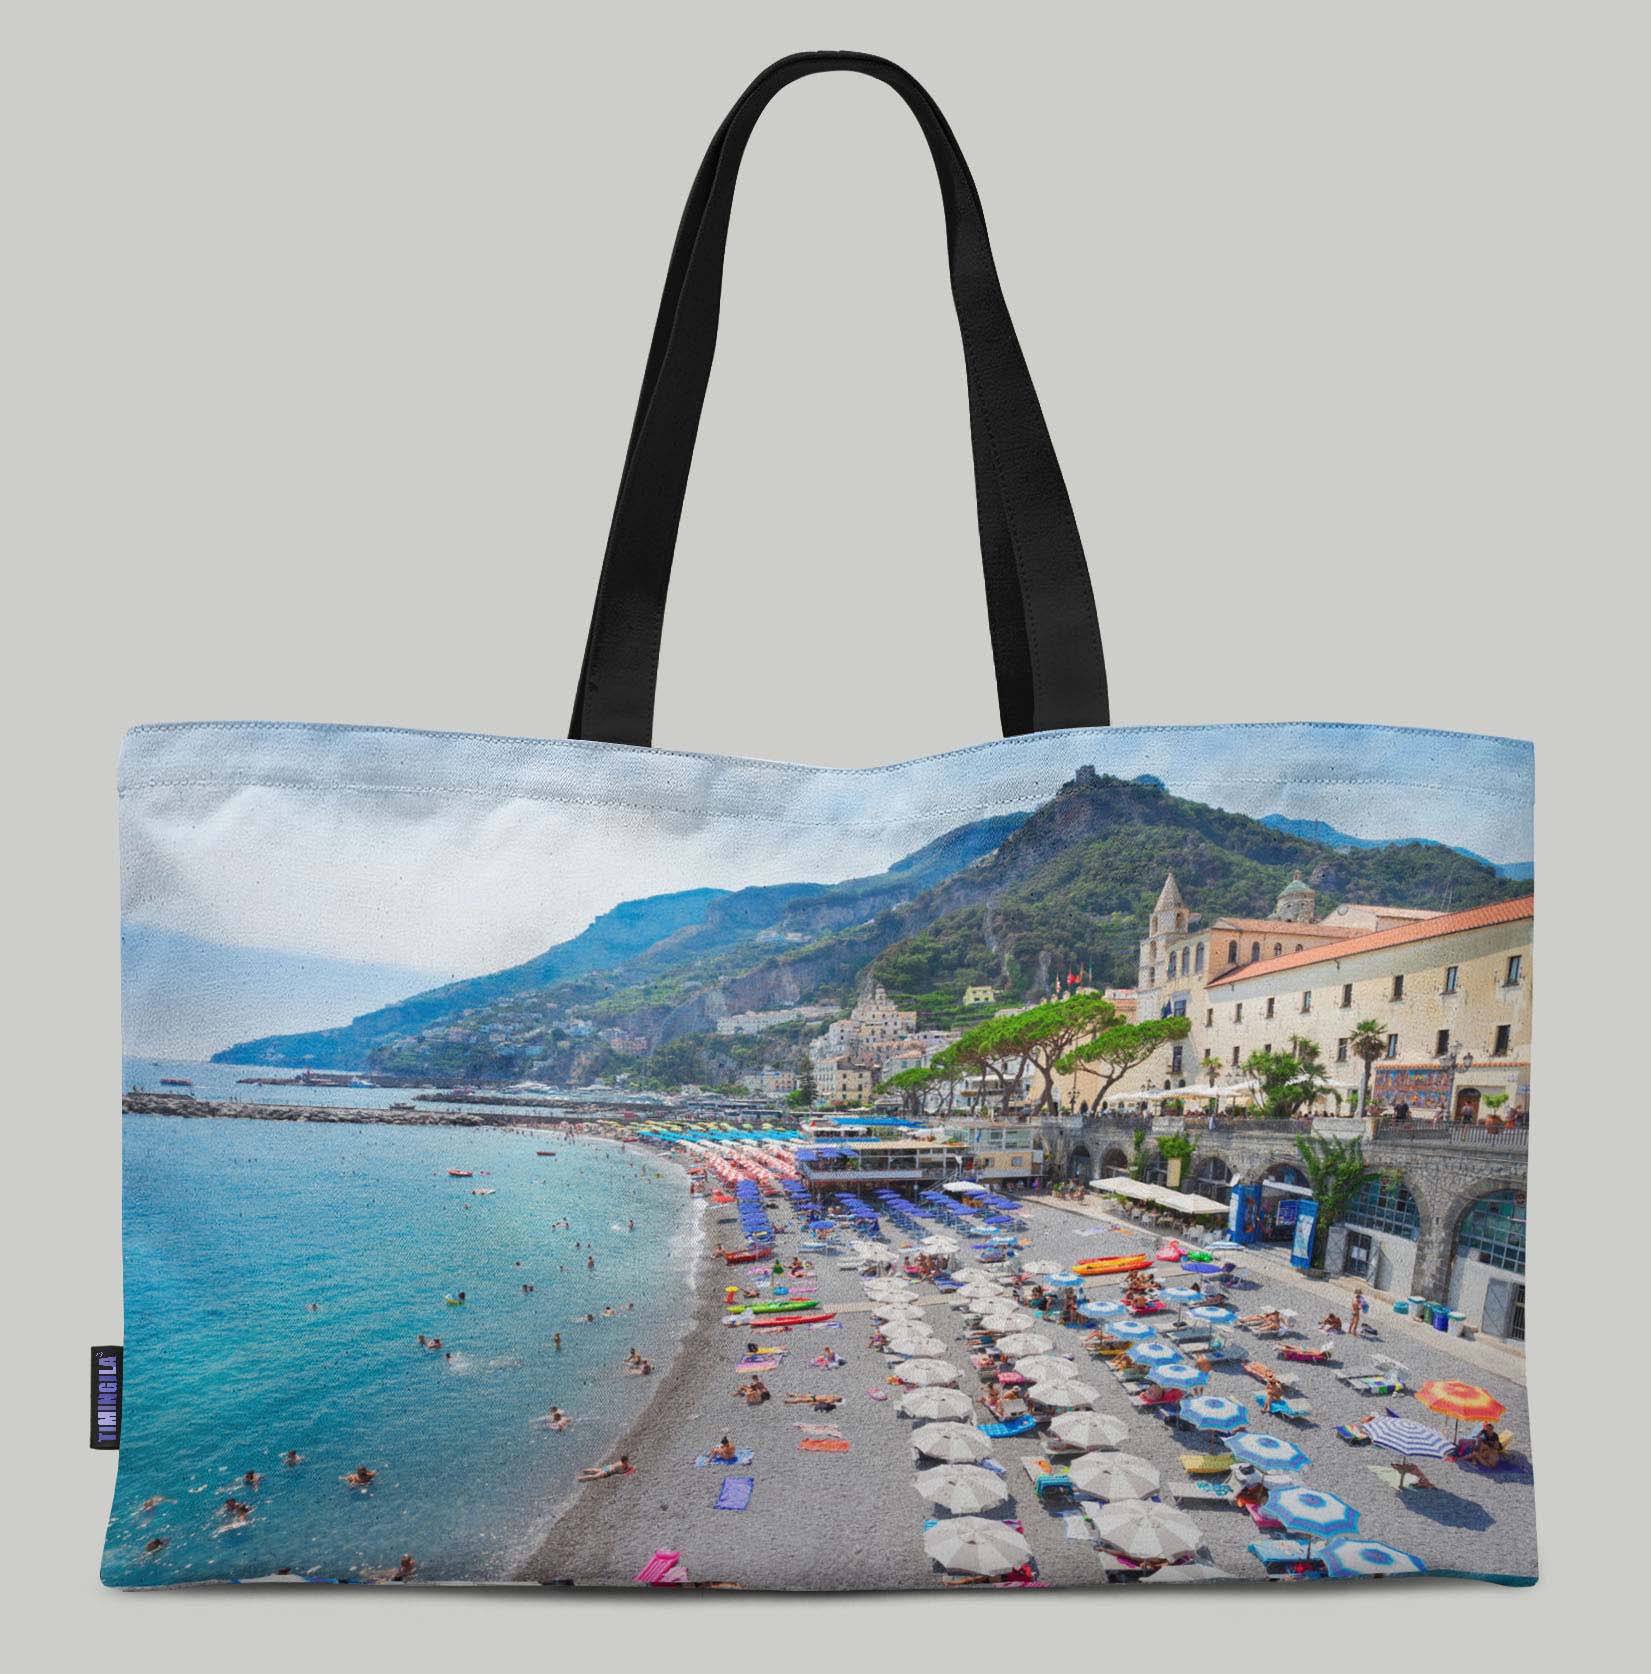 Timingila Heavy Canvas Printed Canvas Large Tote Bag for Beach Shopping-PBM 